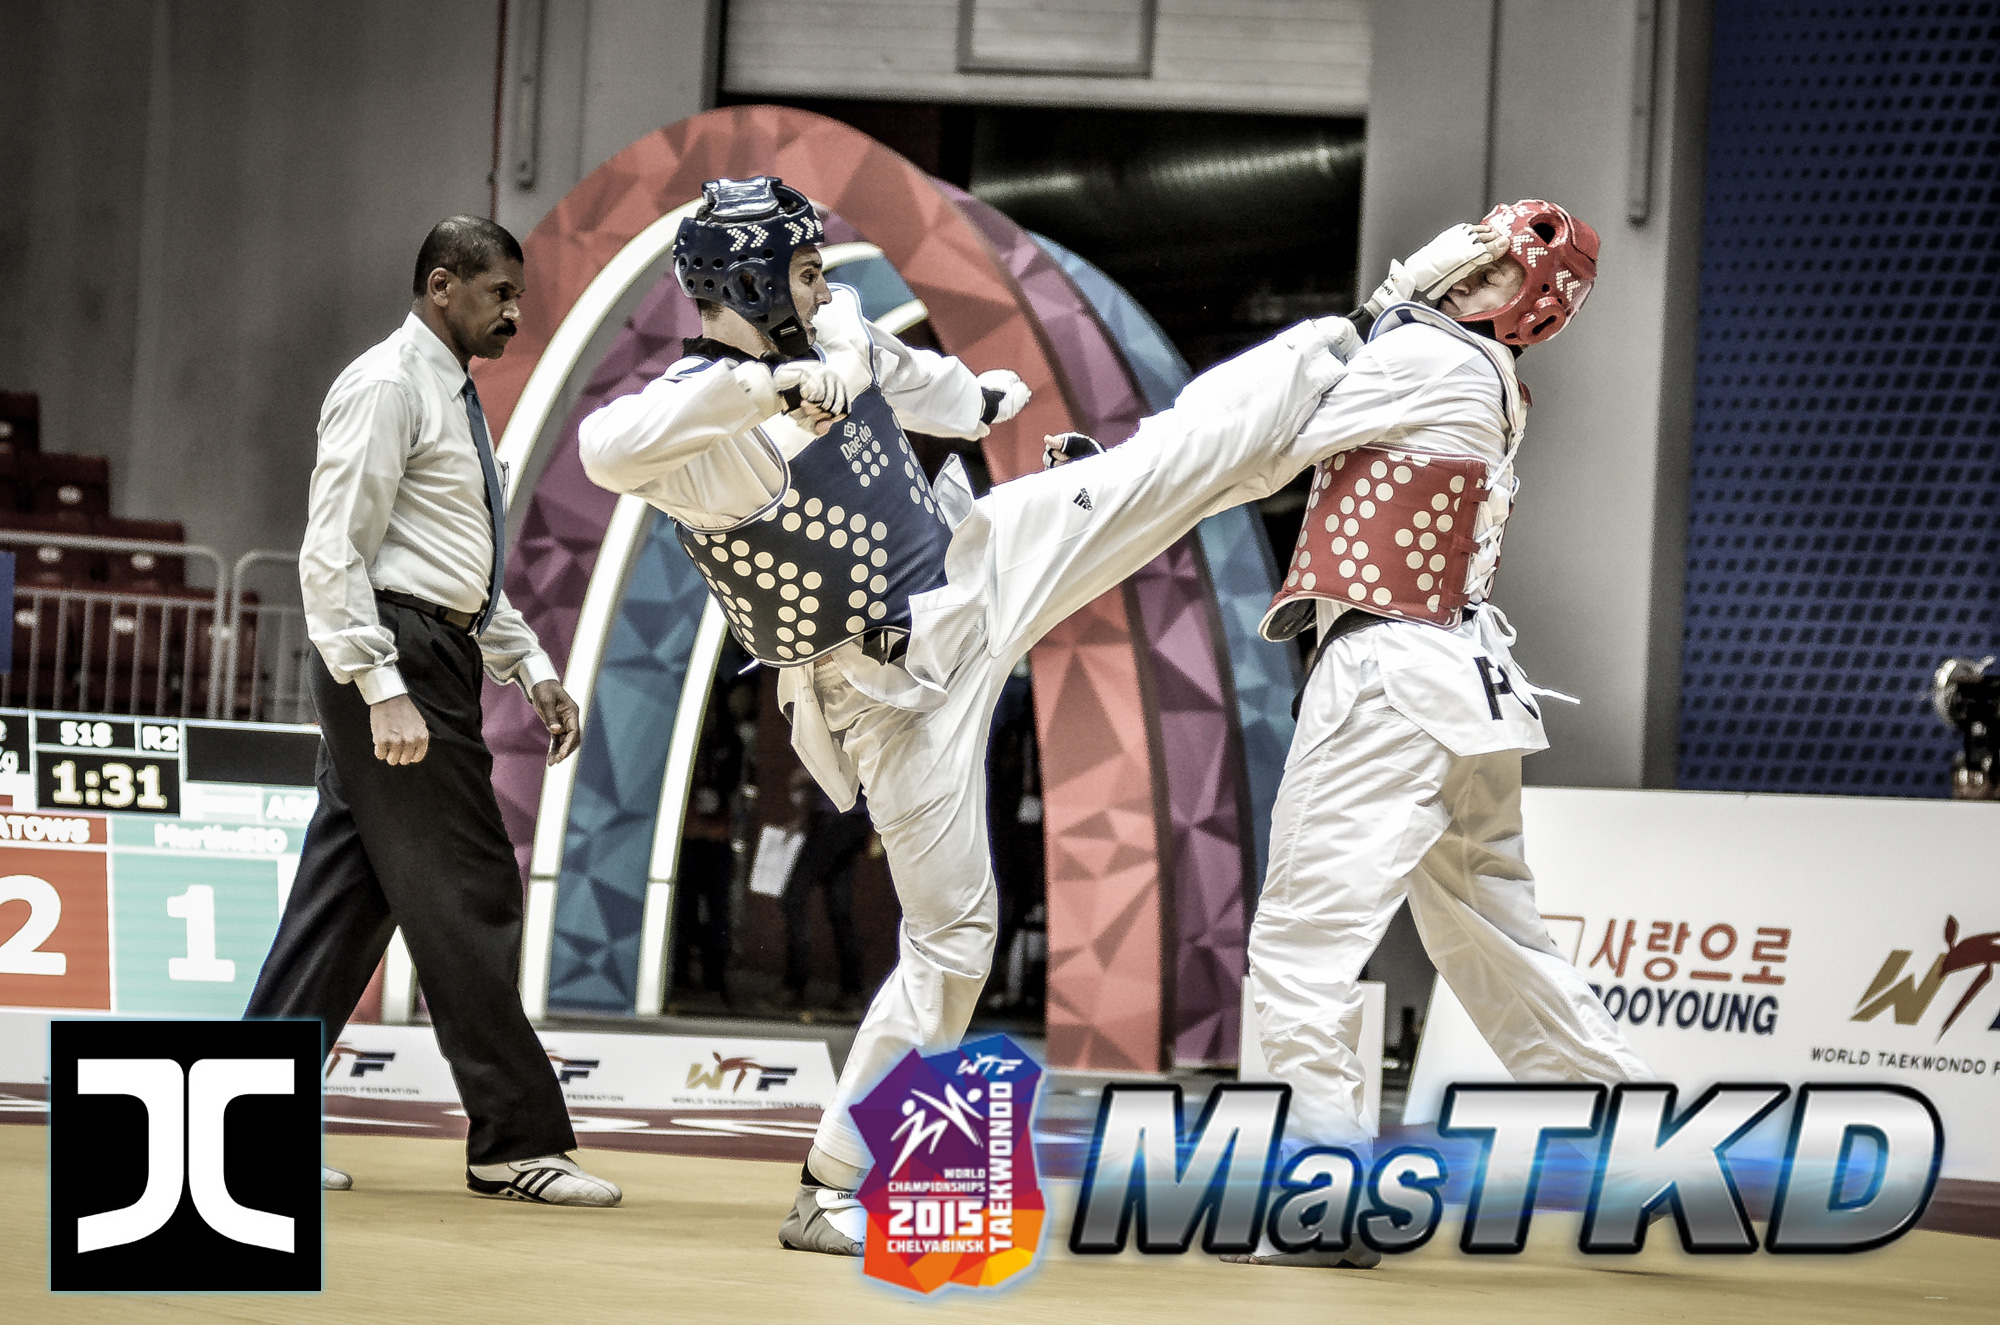 02_JCalicu-Mejores-imagenes-del-Mundial-de-Taekwondo_d5